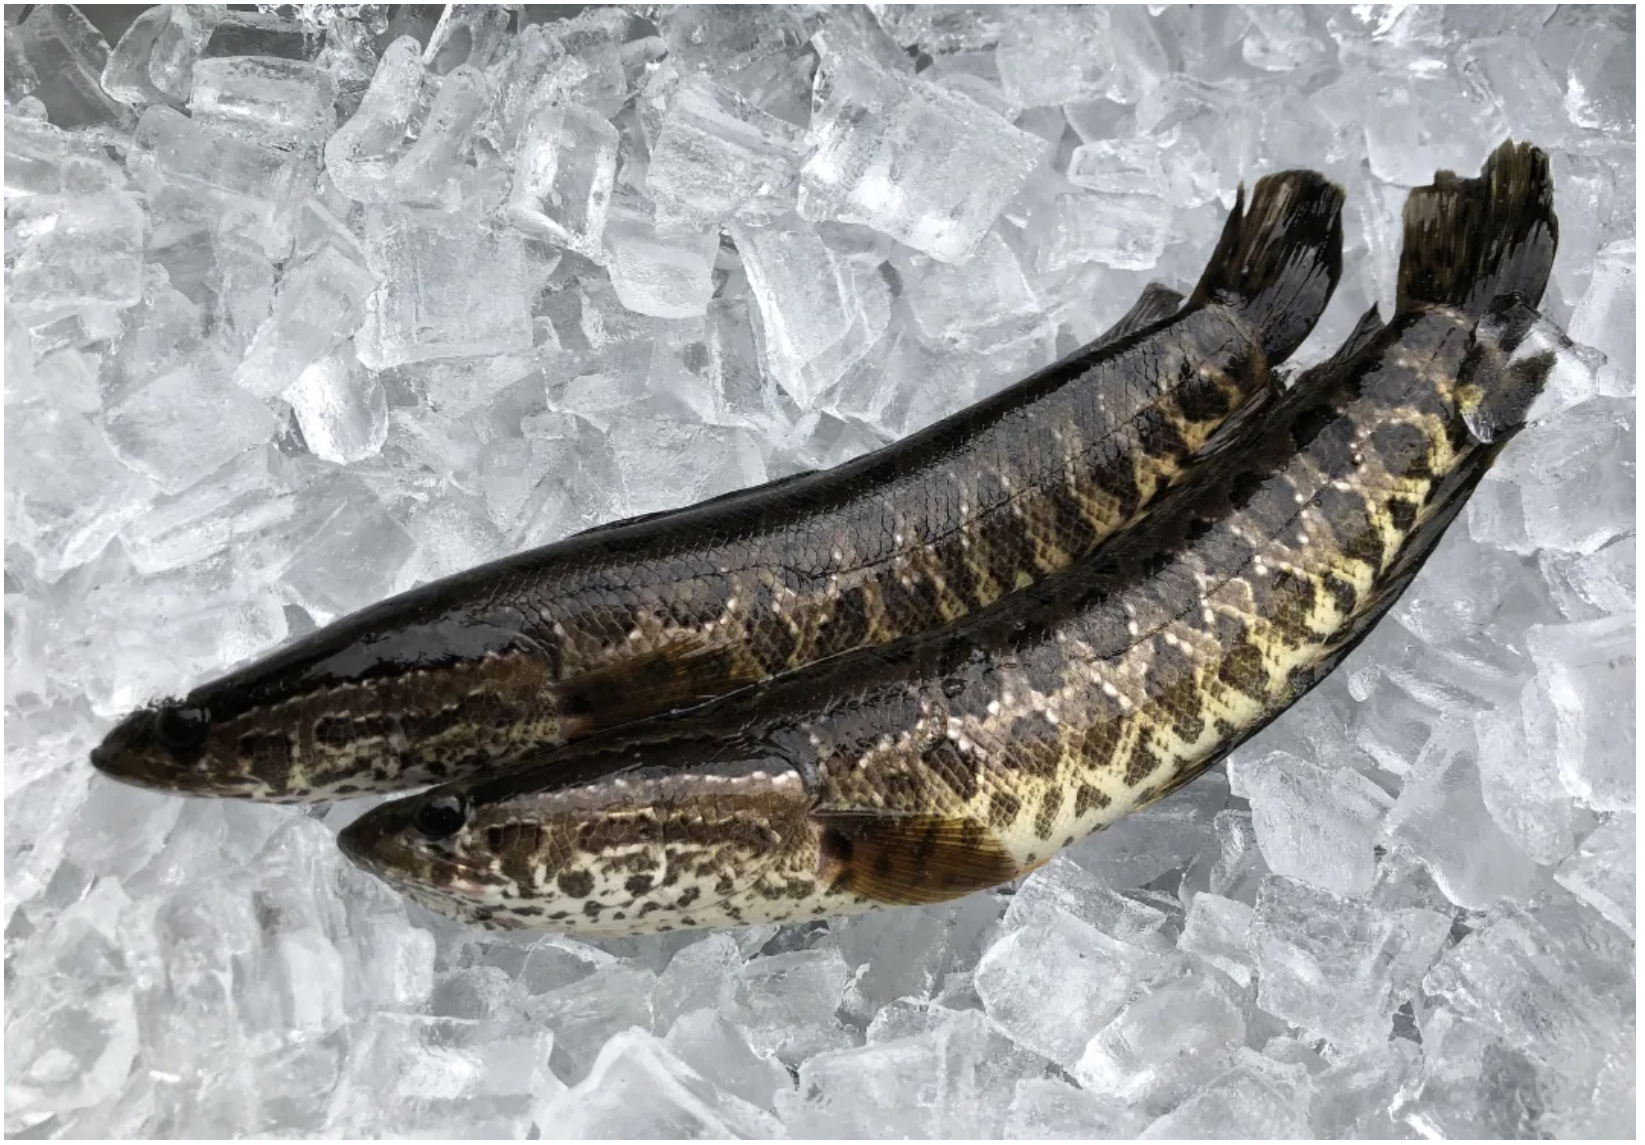 Juvenile northern snakehead fish